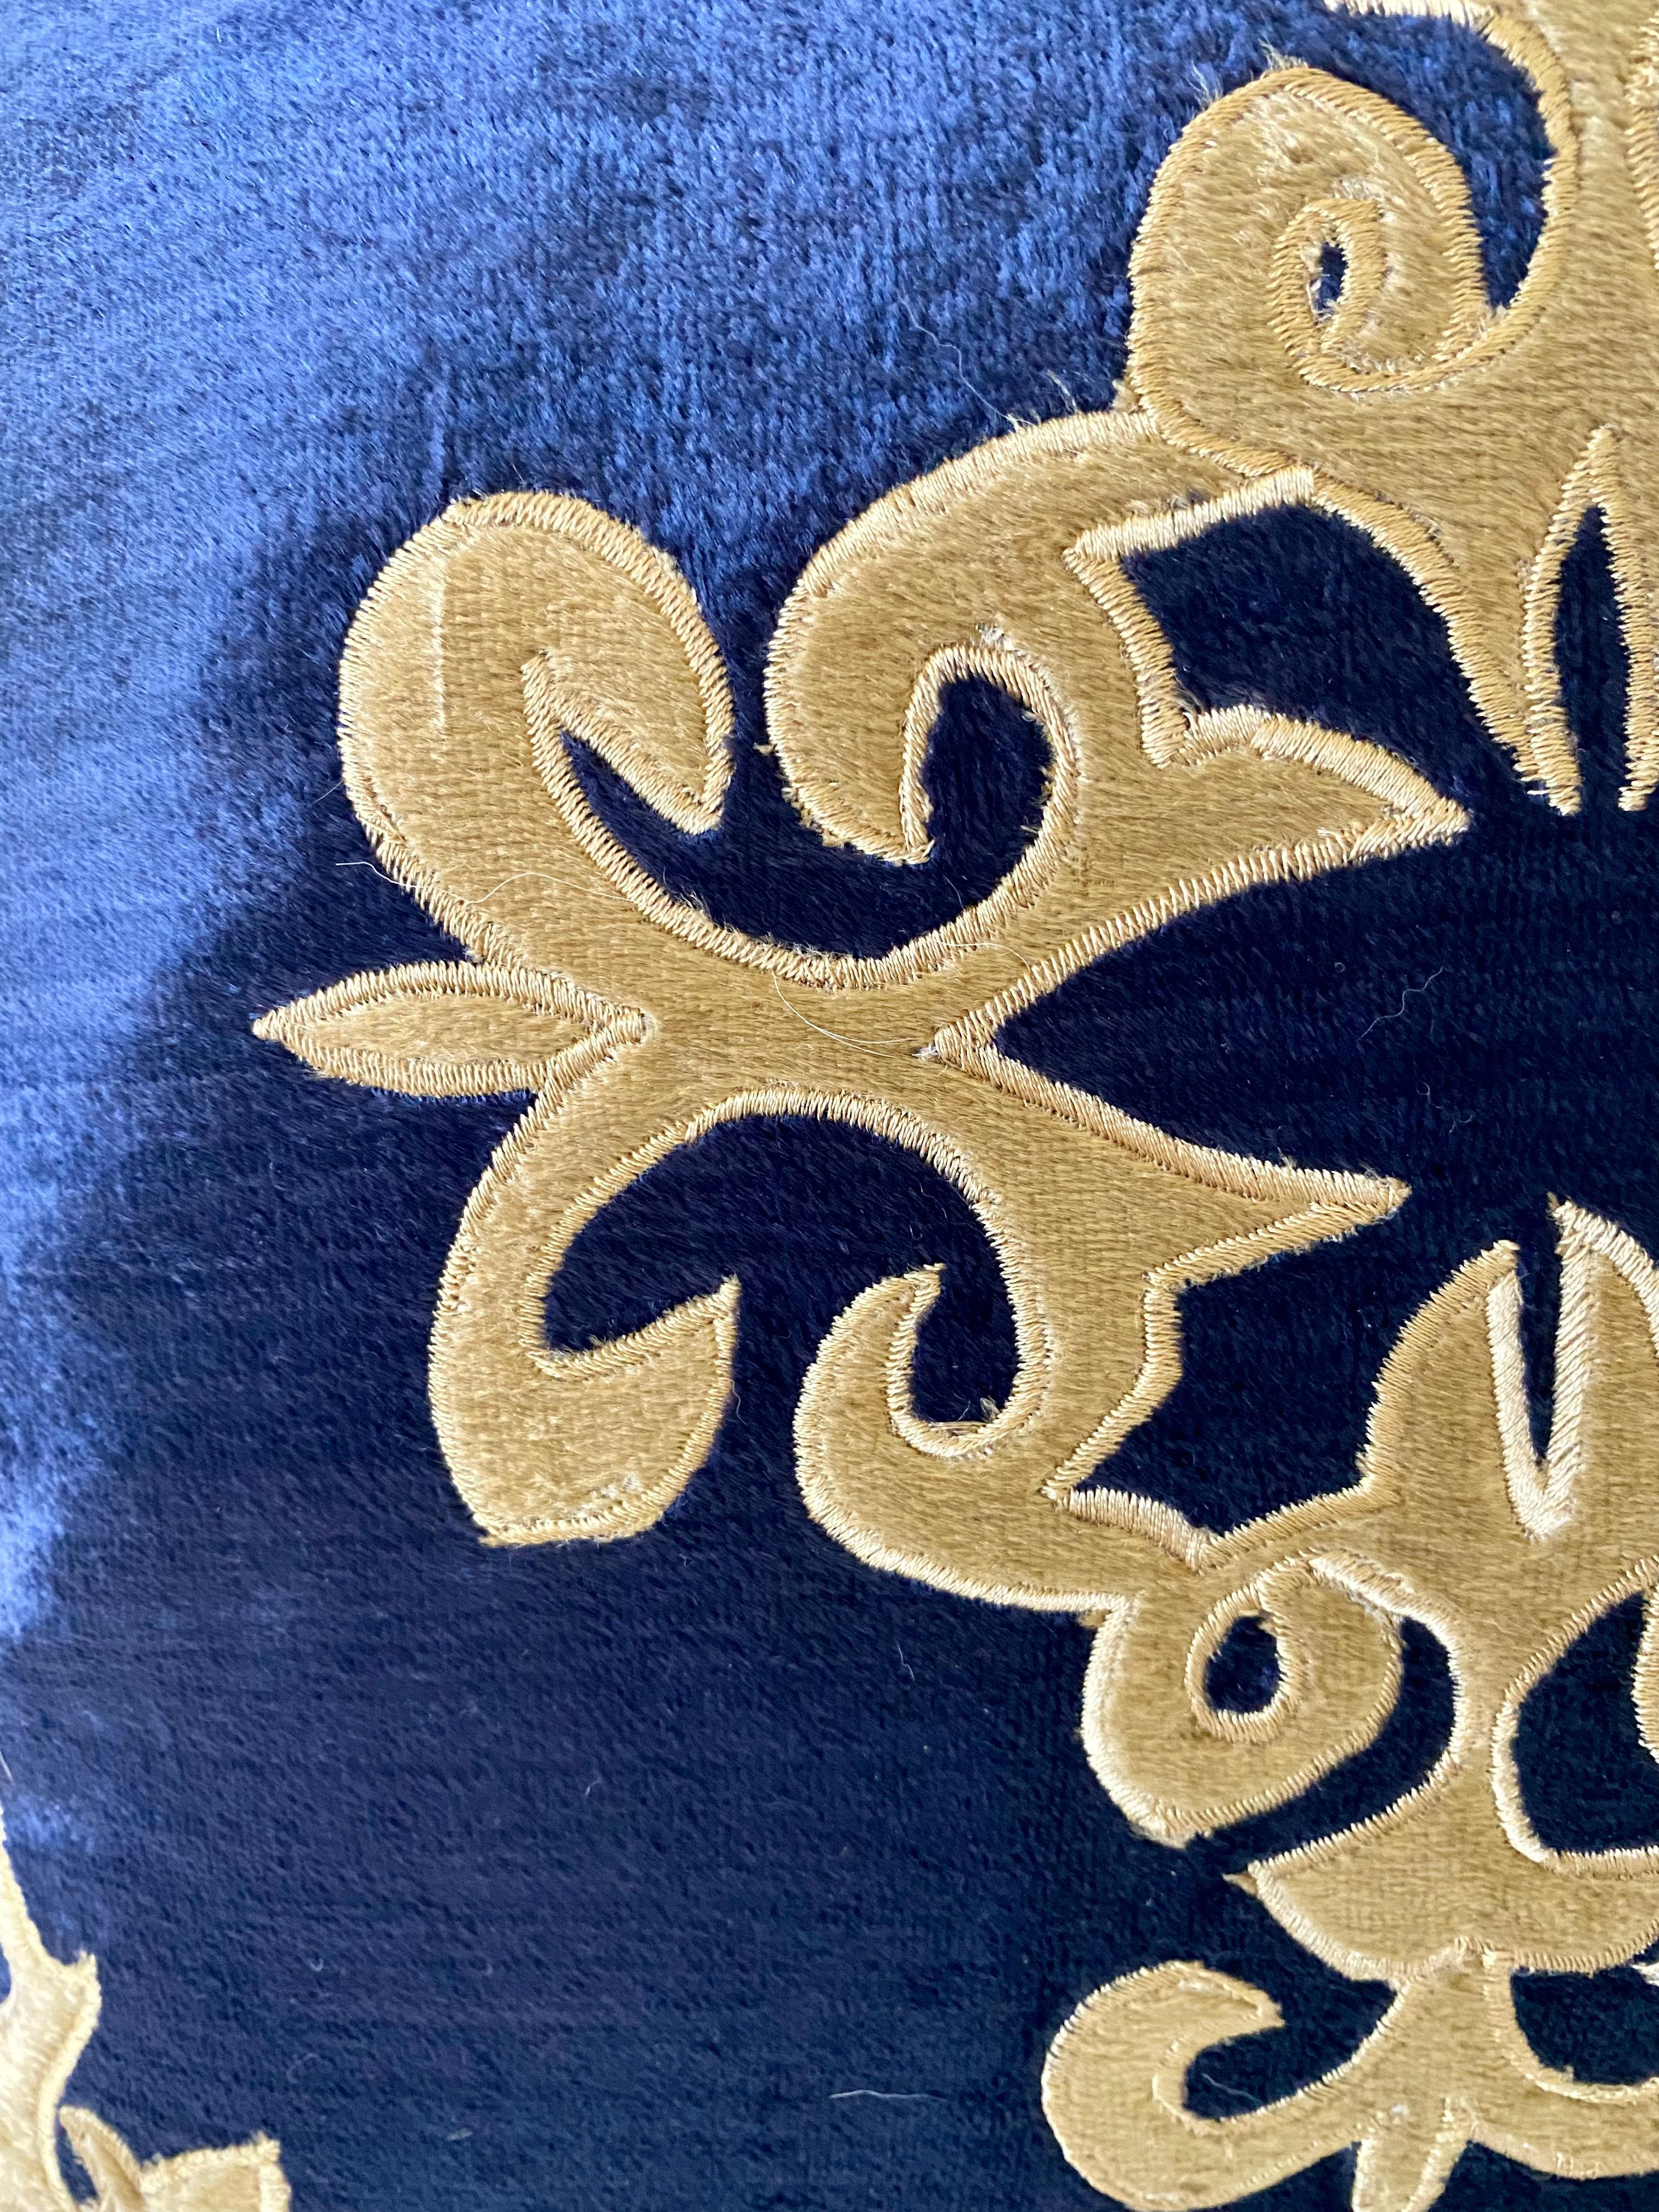 Appliqué Silky Midnight Blue Velvet Pillows with Gold Applique, Gold Silk Cord Detail